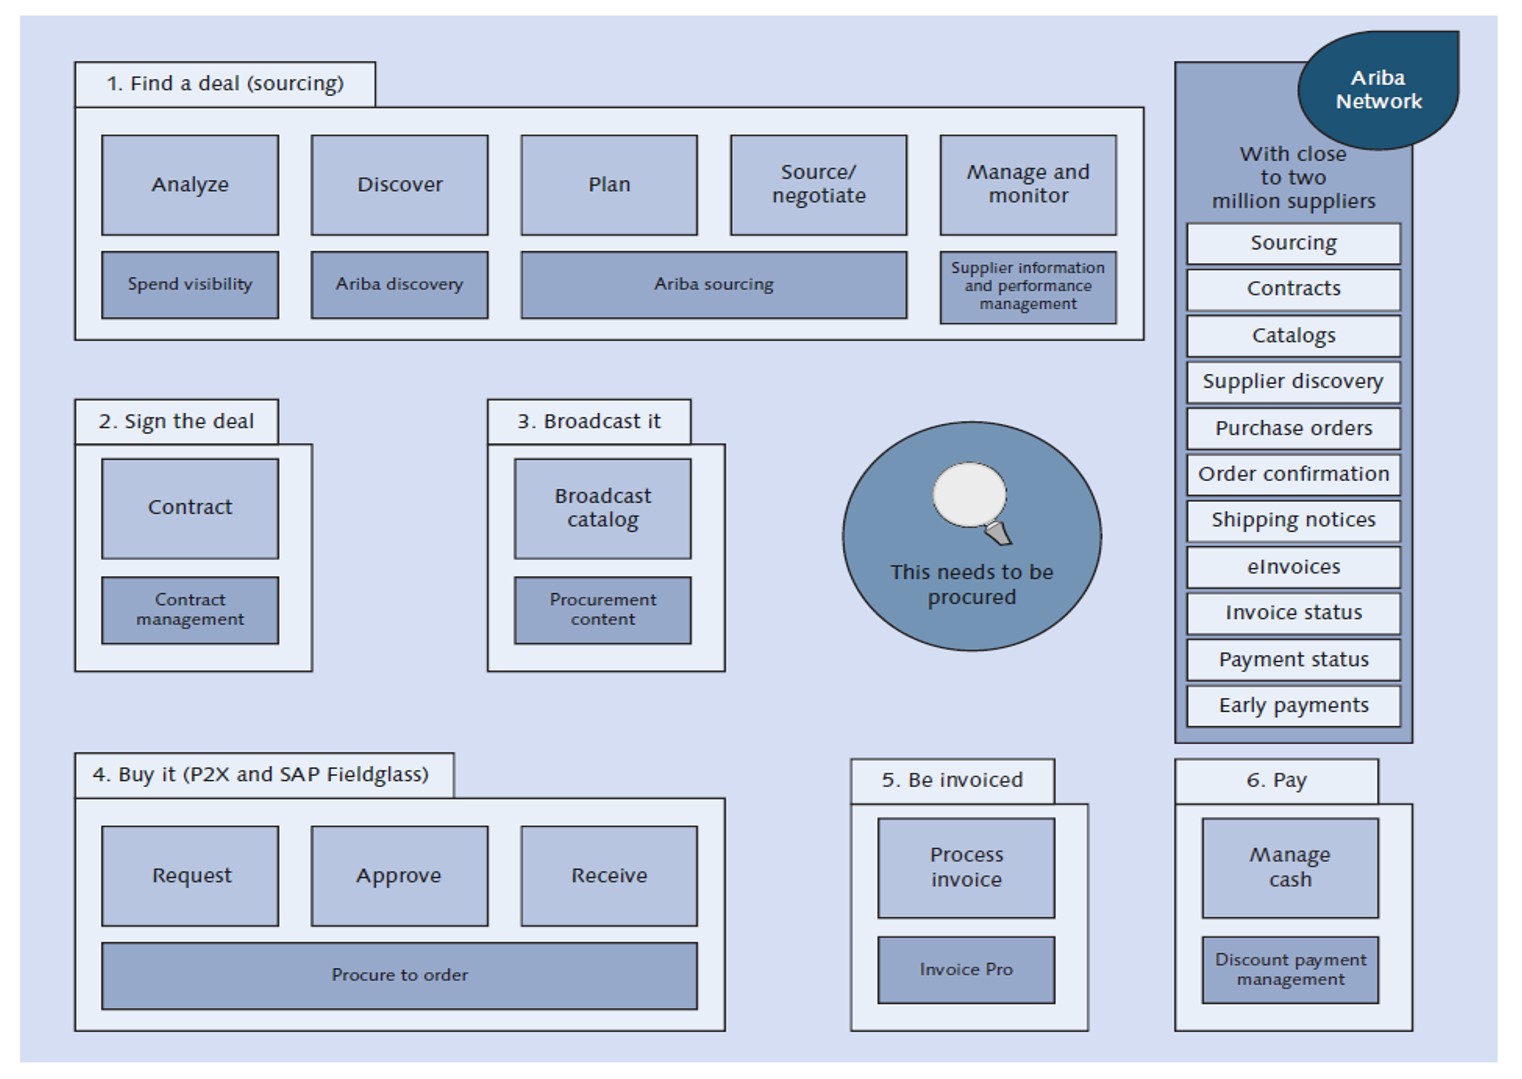 SAP data integration example architecture - Cloud Adoption